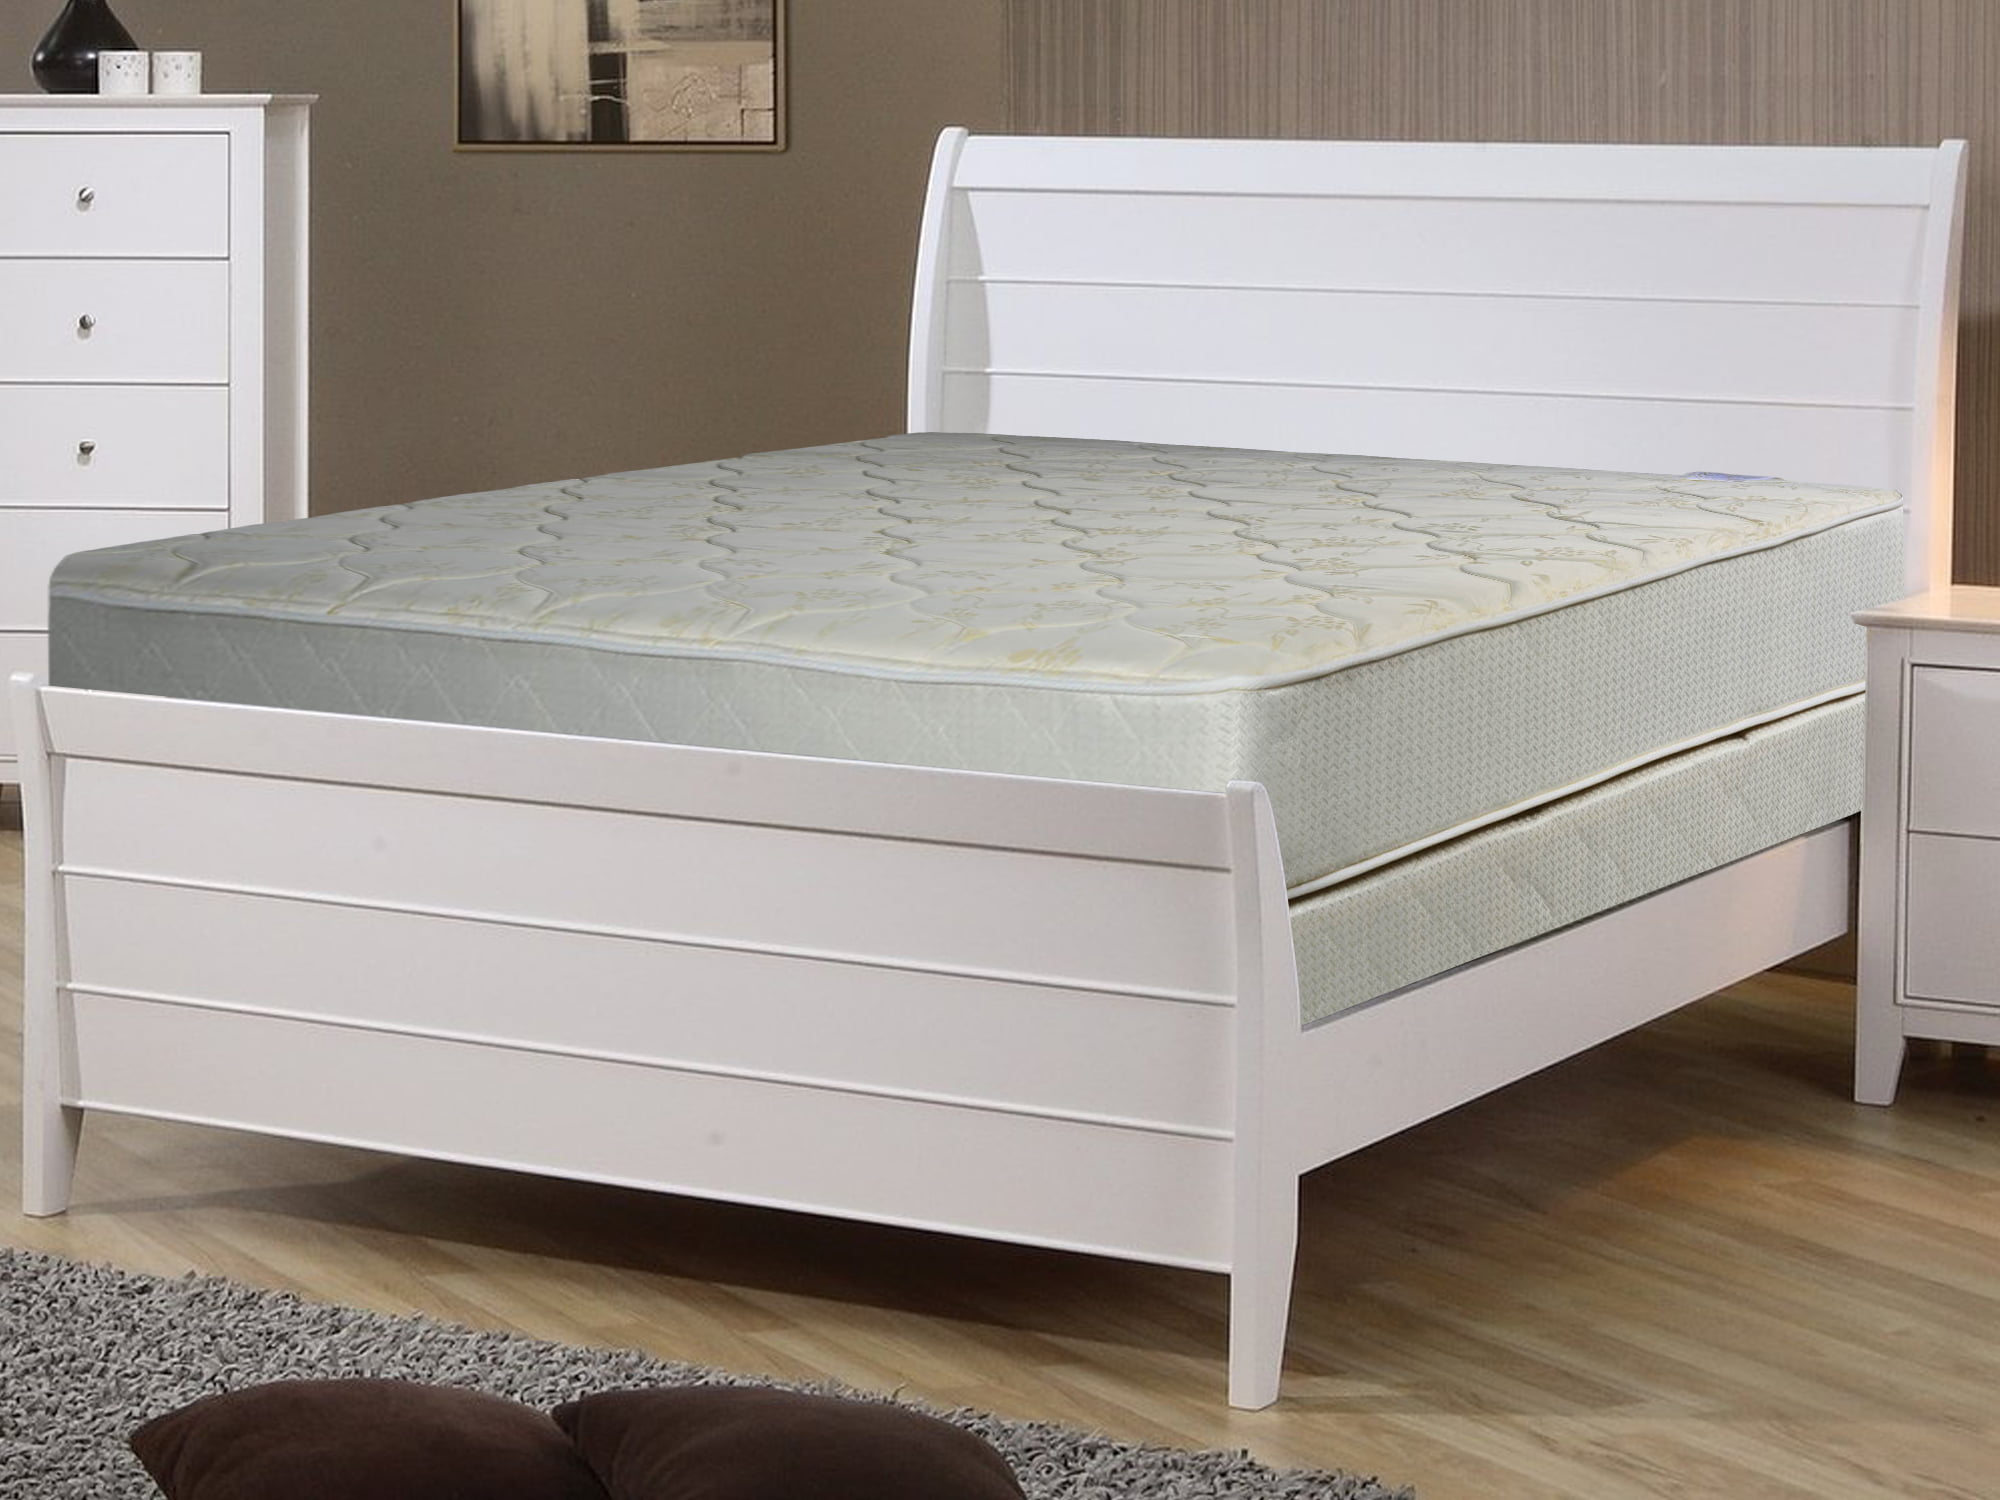 homedics mattress 9 inch